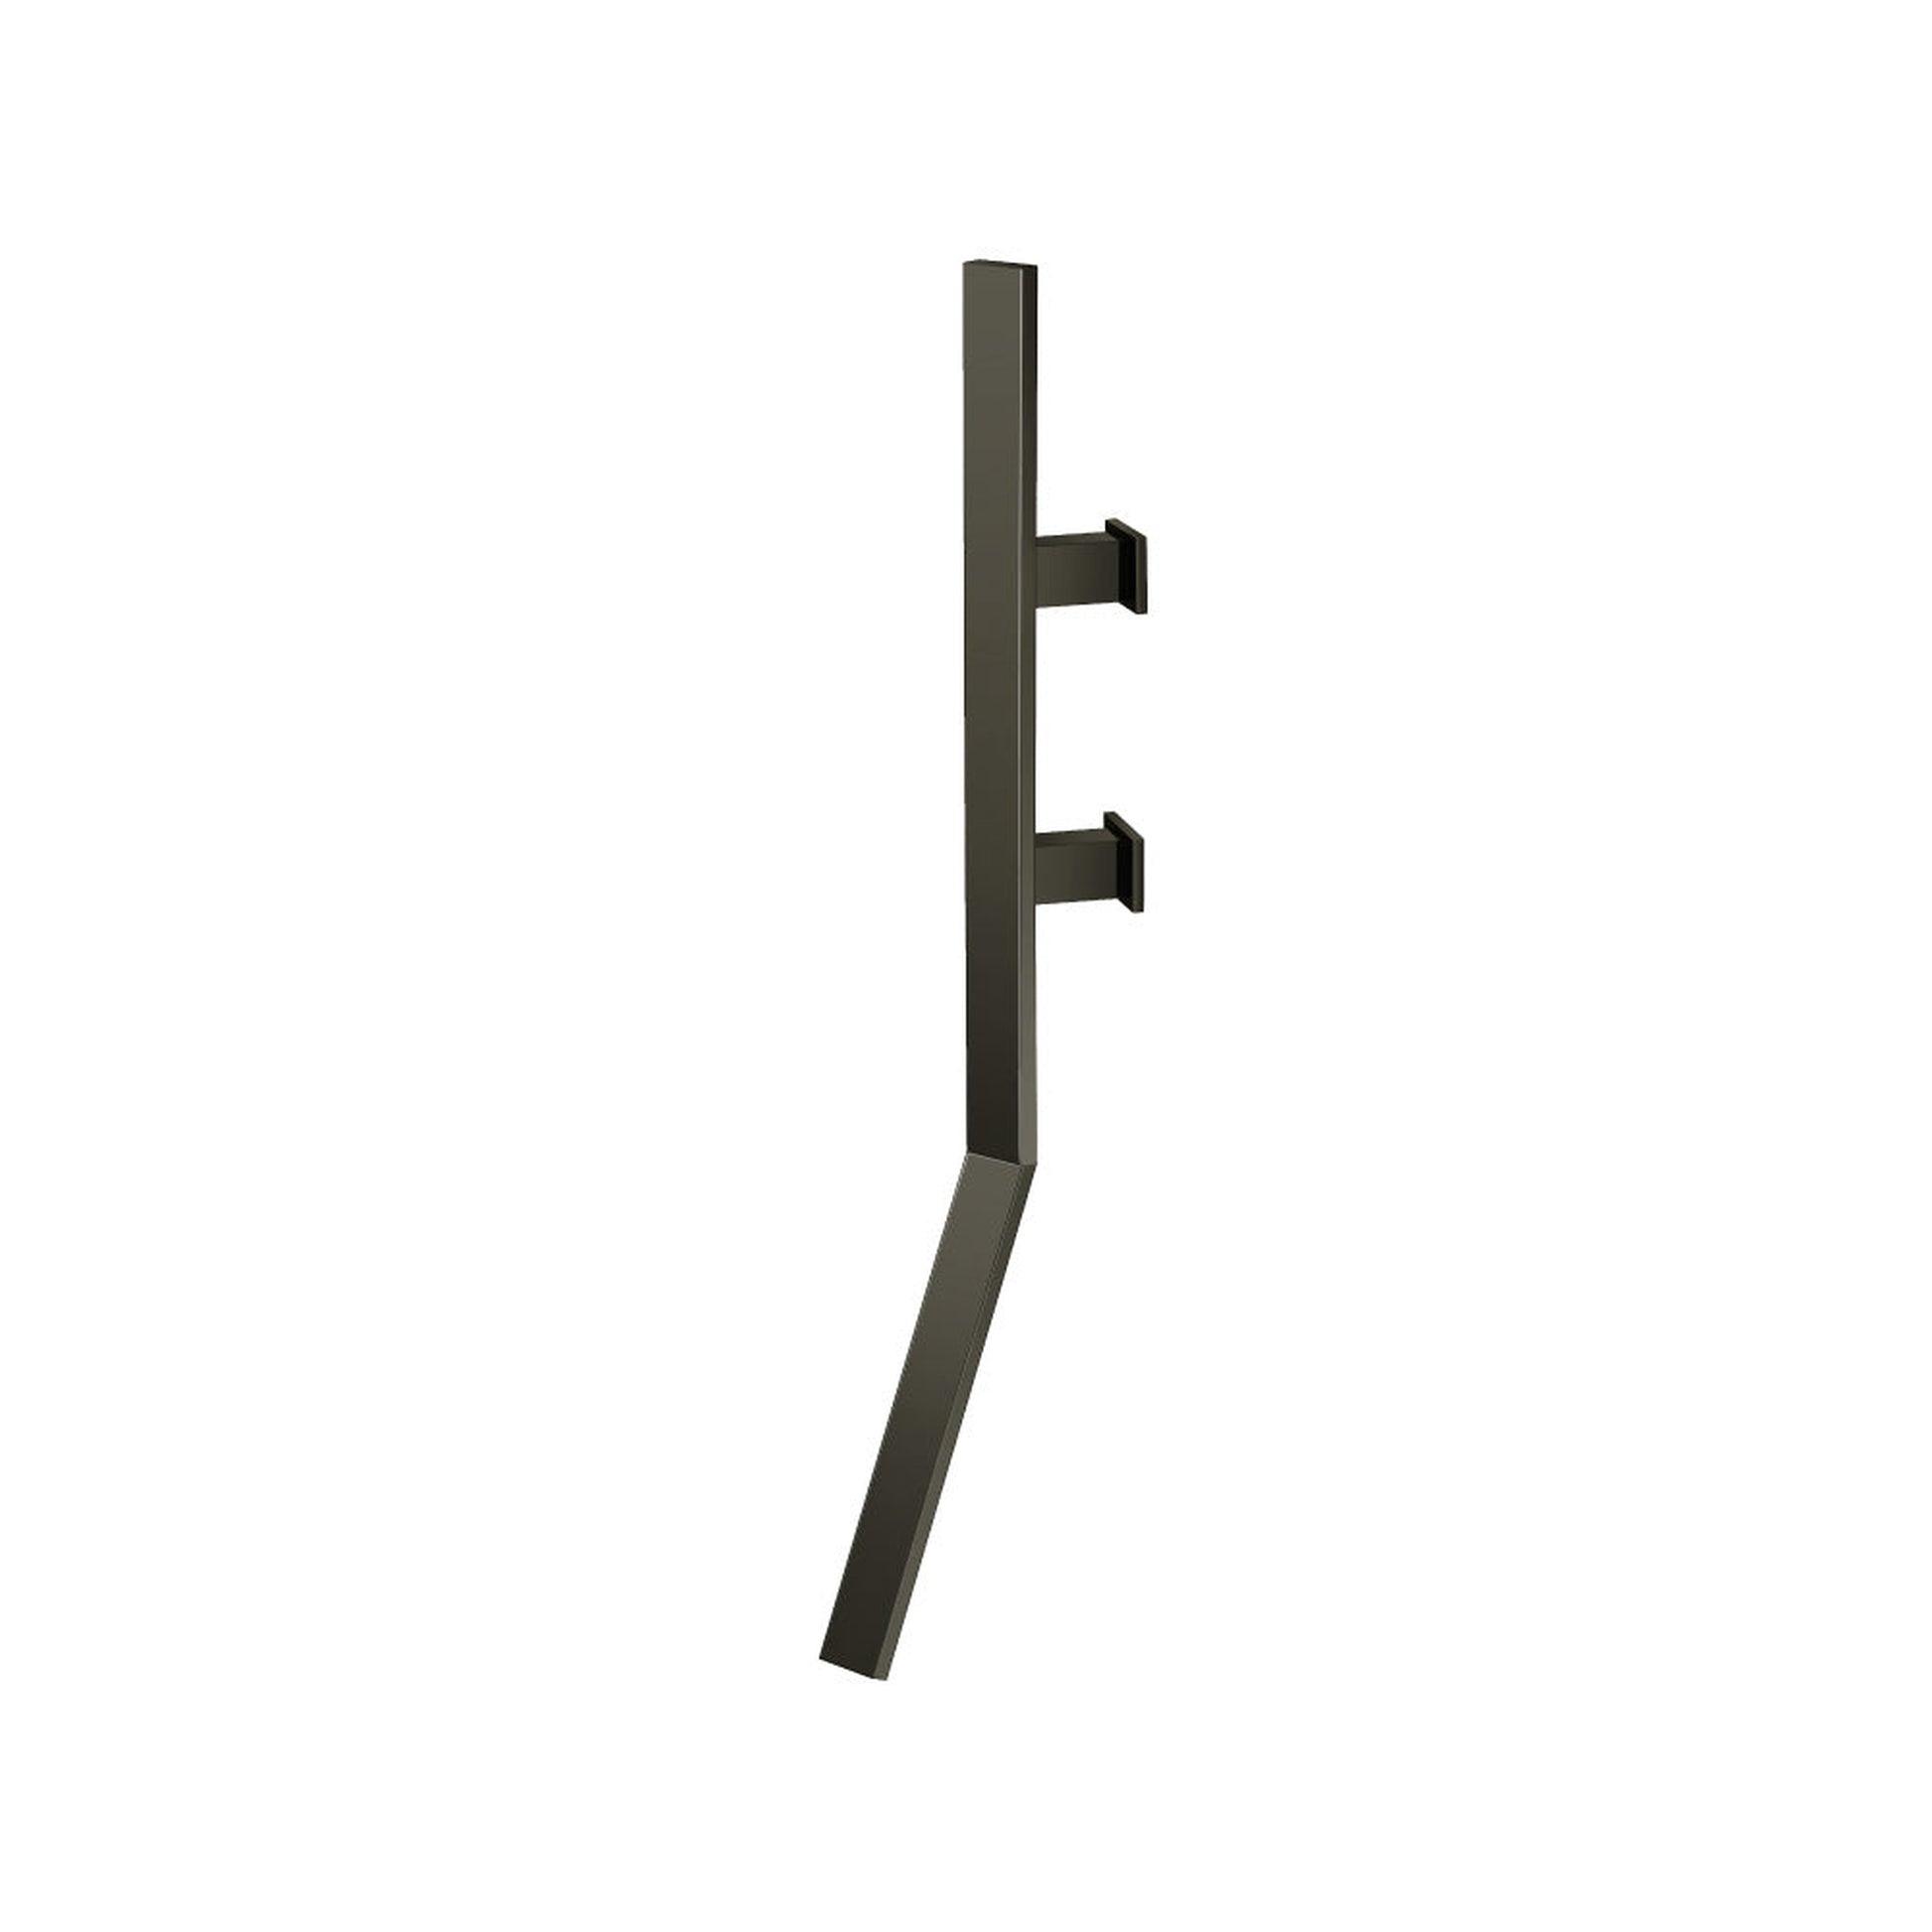 Isenberg Infinity Wall Mount Faucet Spout in Gun Metal Grey